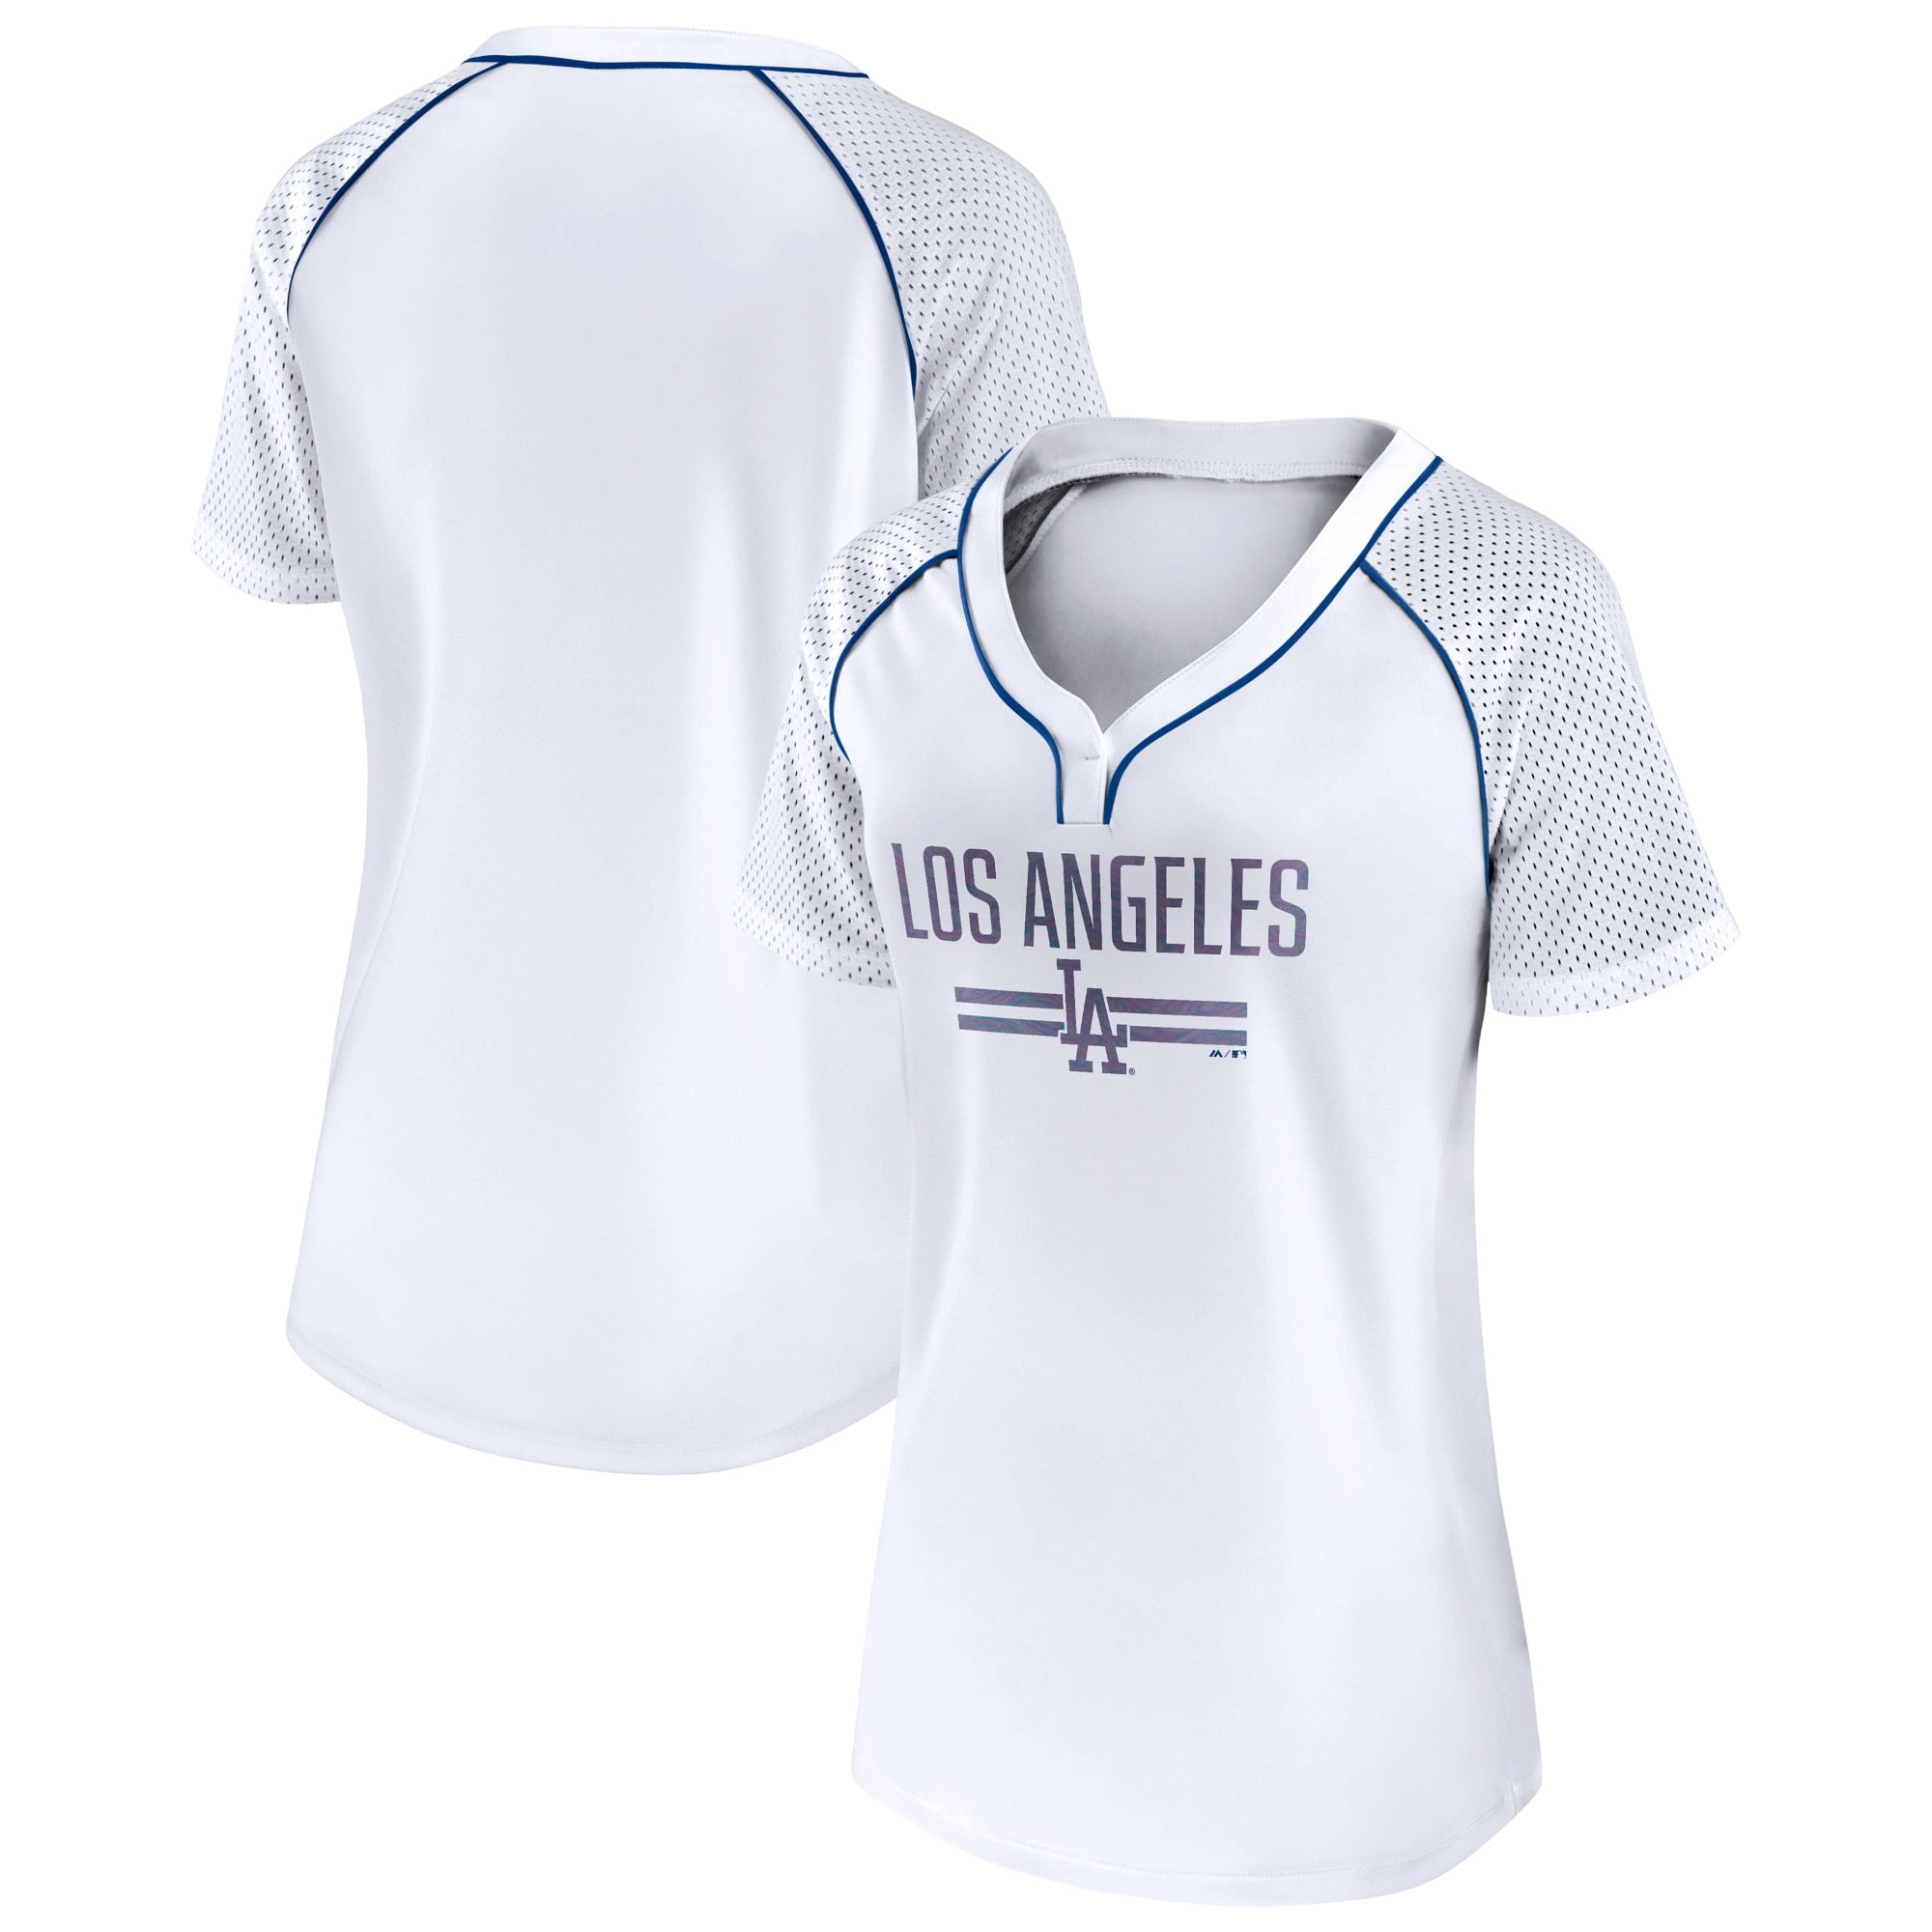 Women's Fanatics Branded White Los Angeles Dodgers Play Calling Raglan  V-Neck T-Shirt 